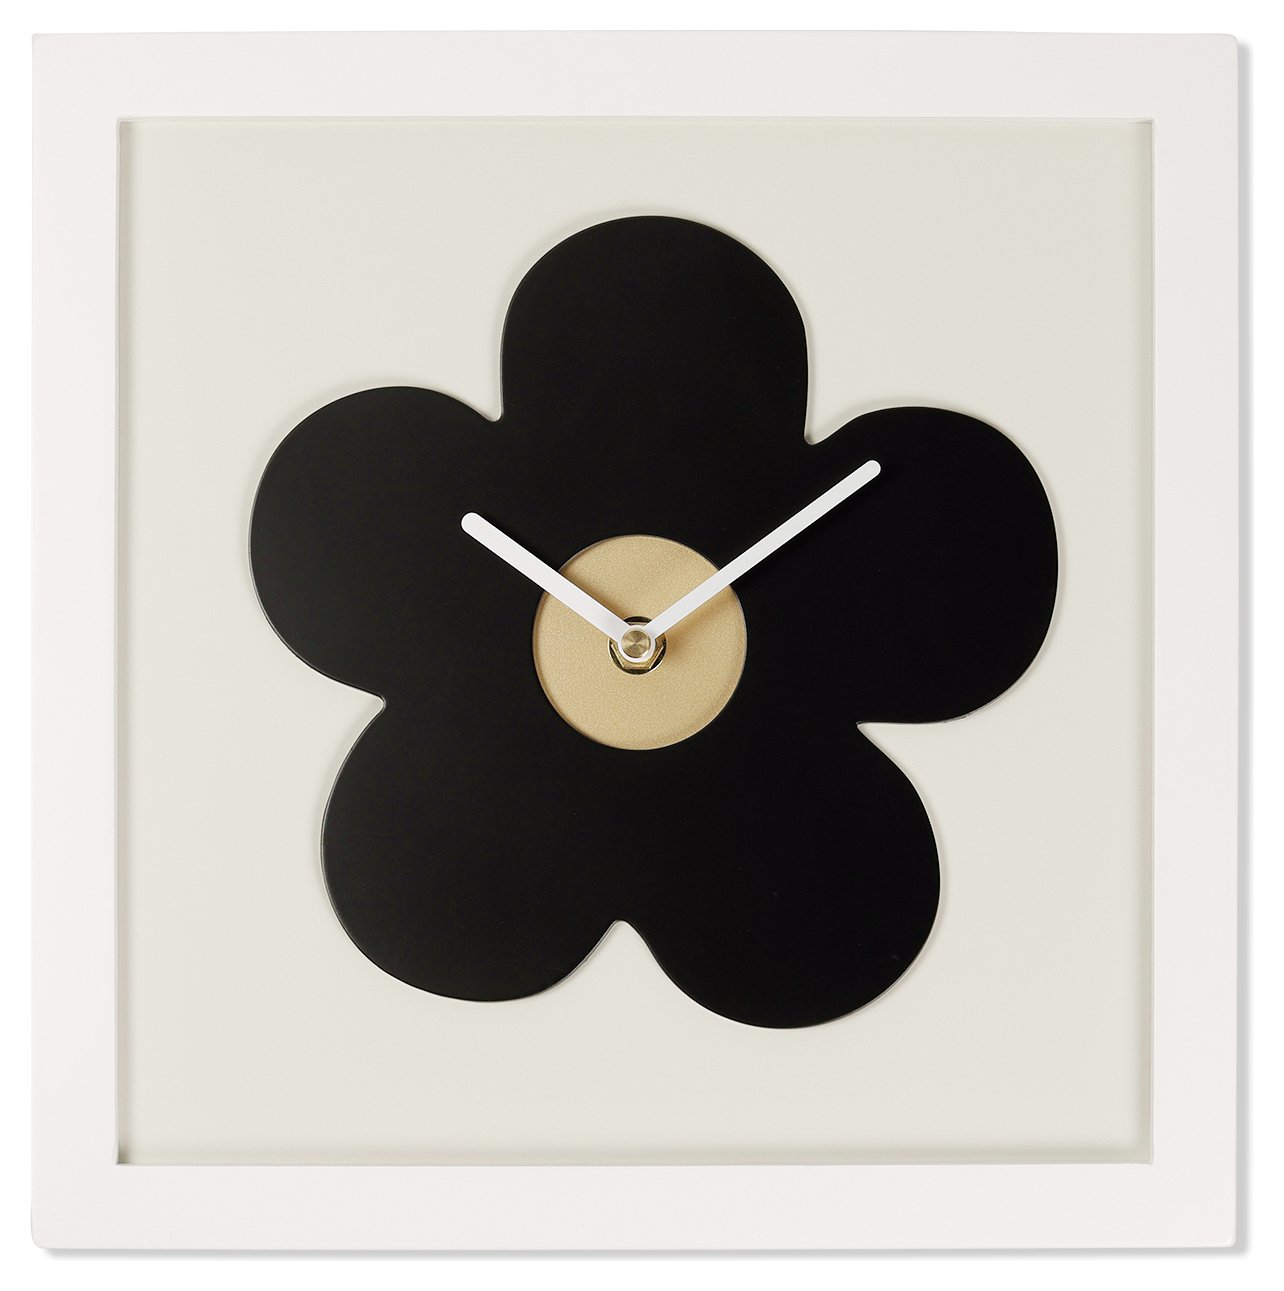 Spirit Flower Shaped Wall Clock - Black 